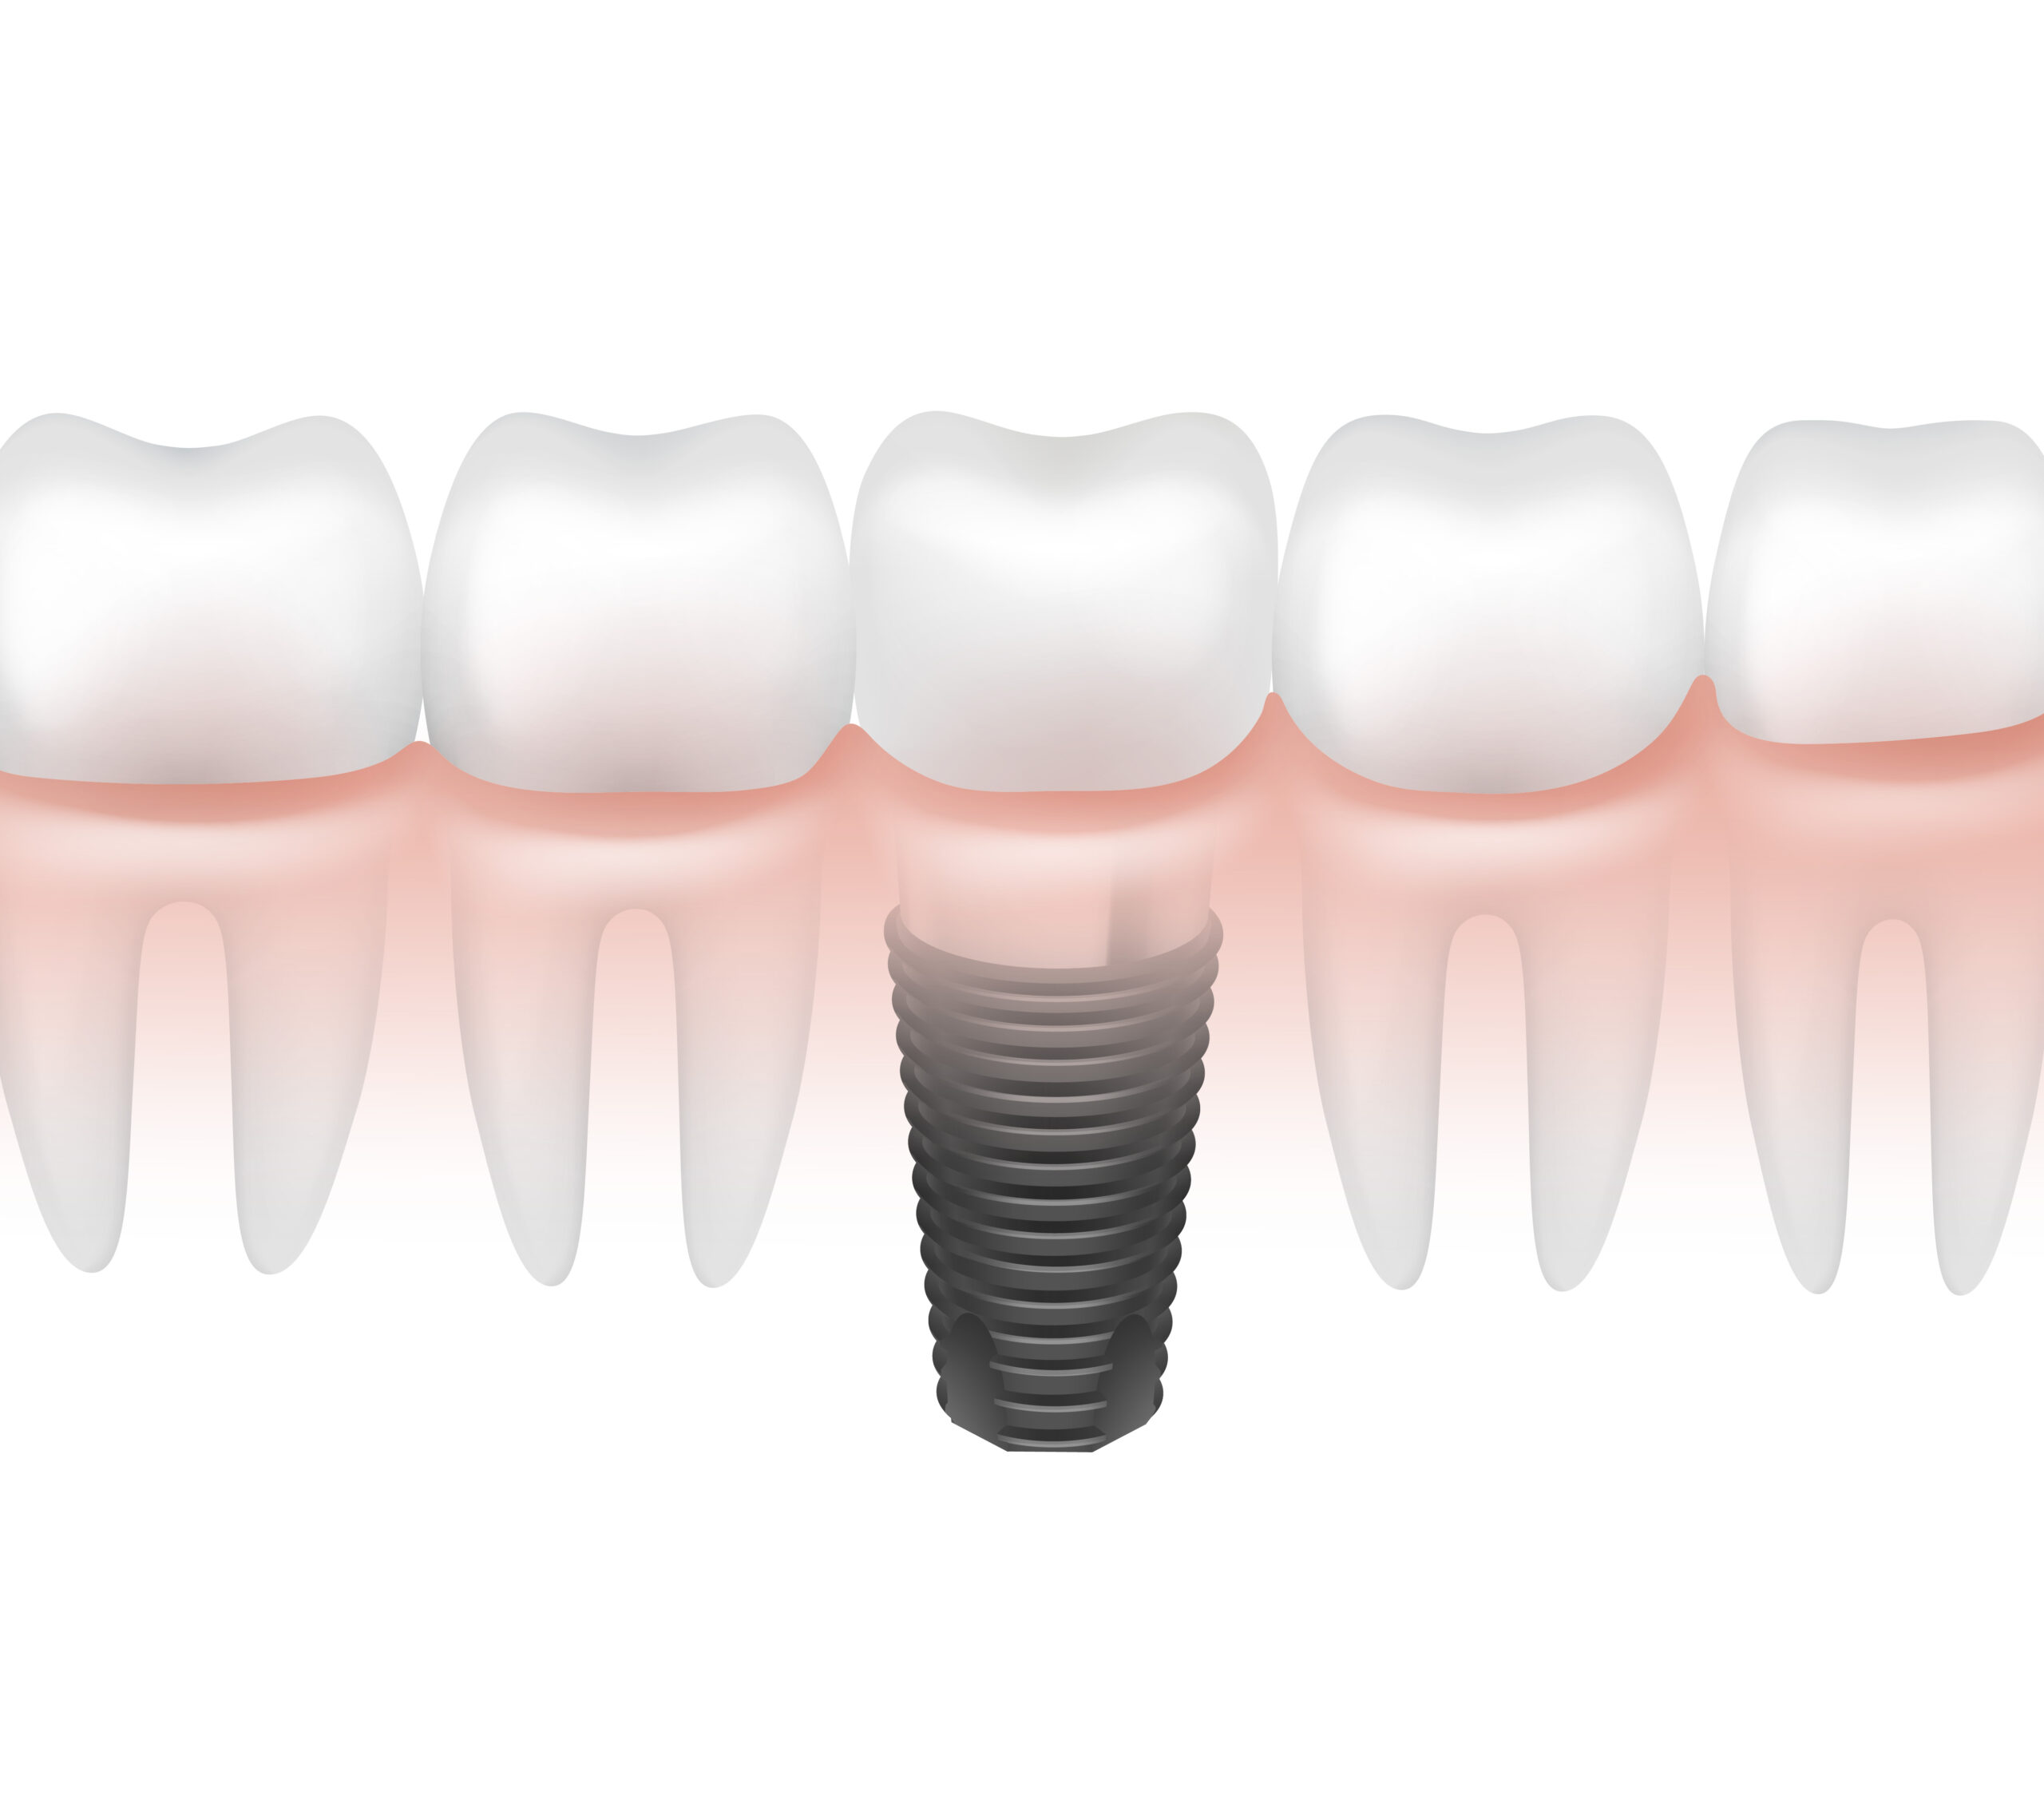 Dental Implants v/s Bridges